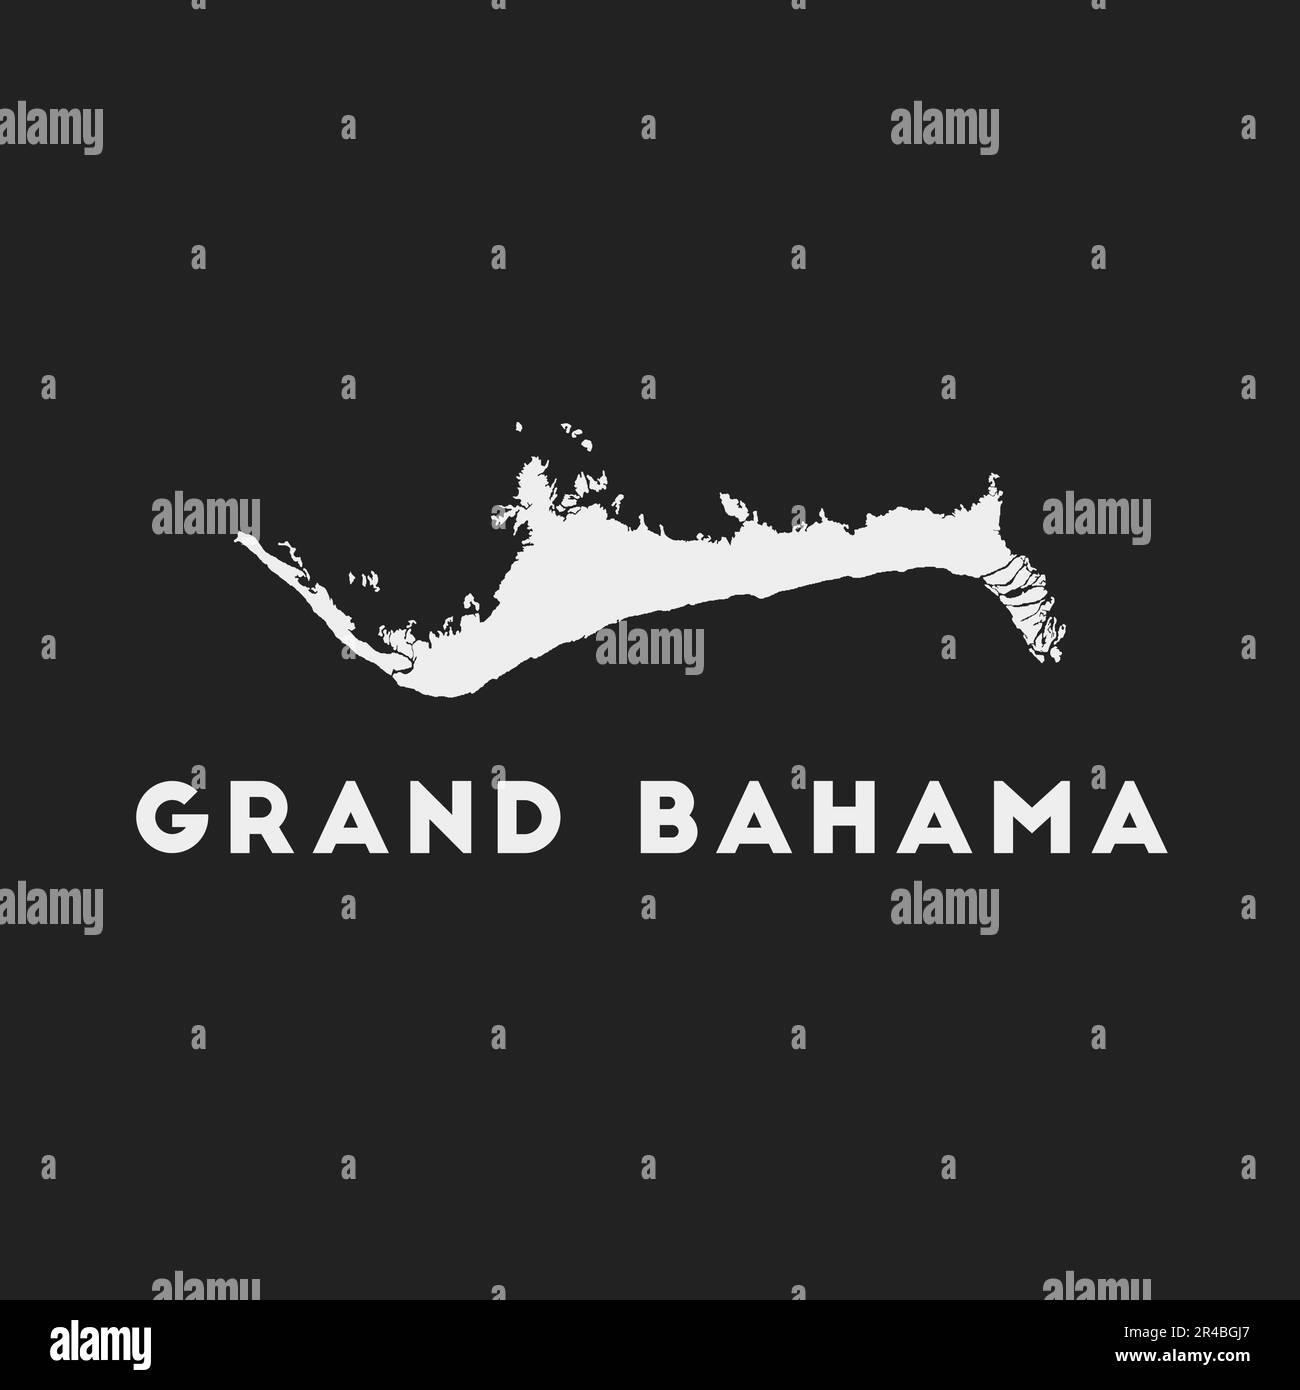 Grand Bahama icon. Island map on dark background. Stylish Grand Bahama map with island name. Vector illustration. Stock Vector